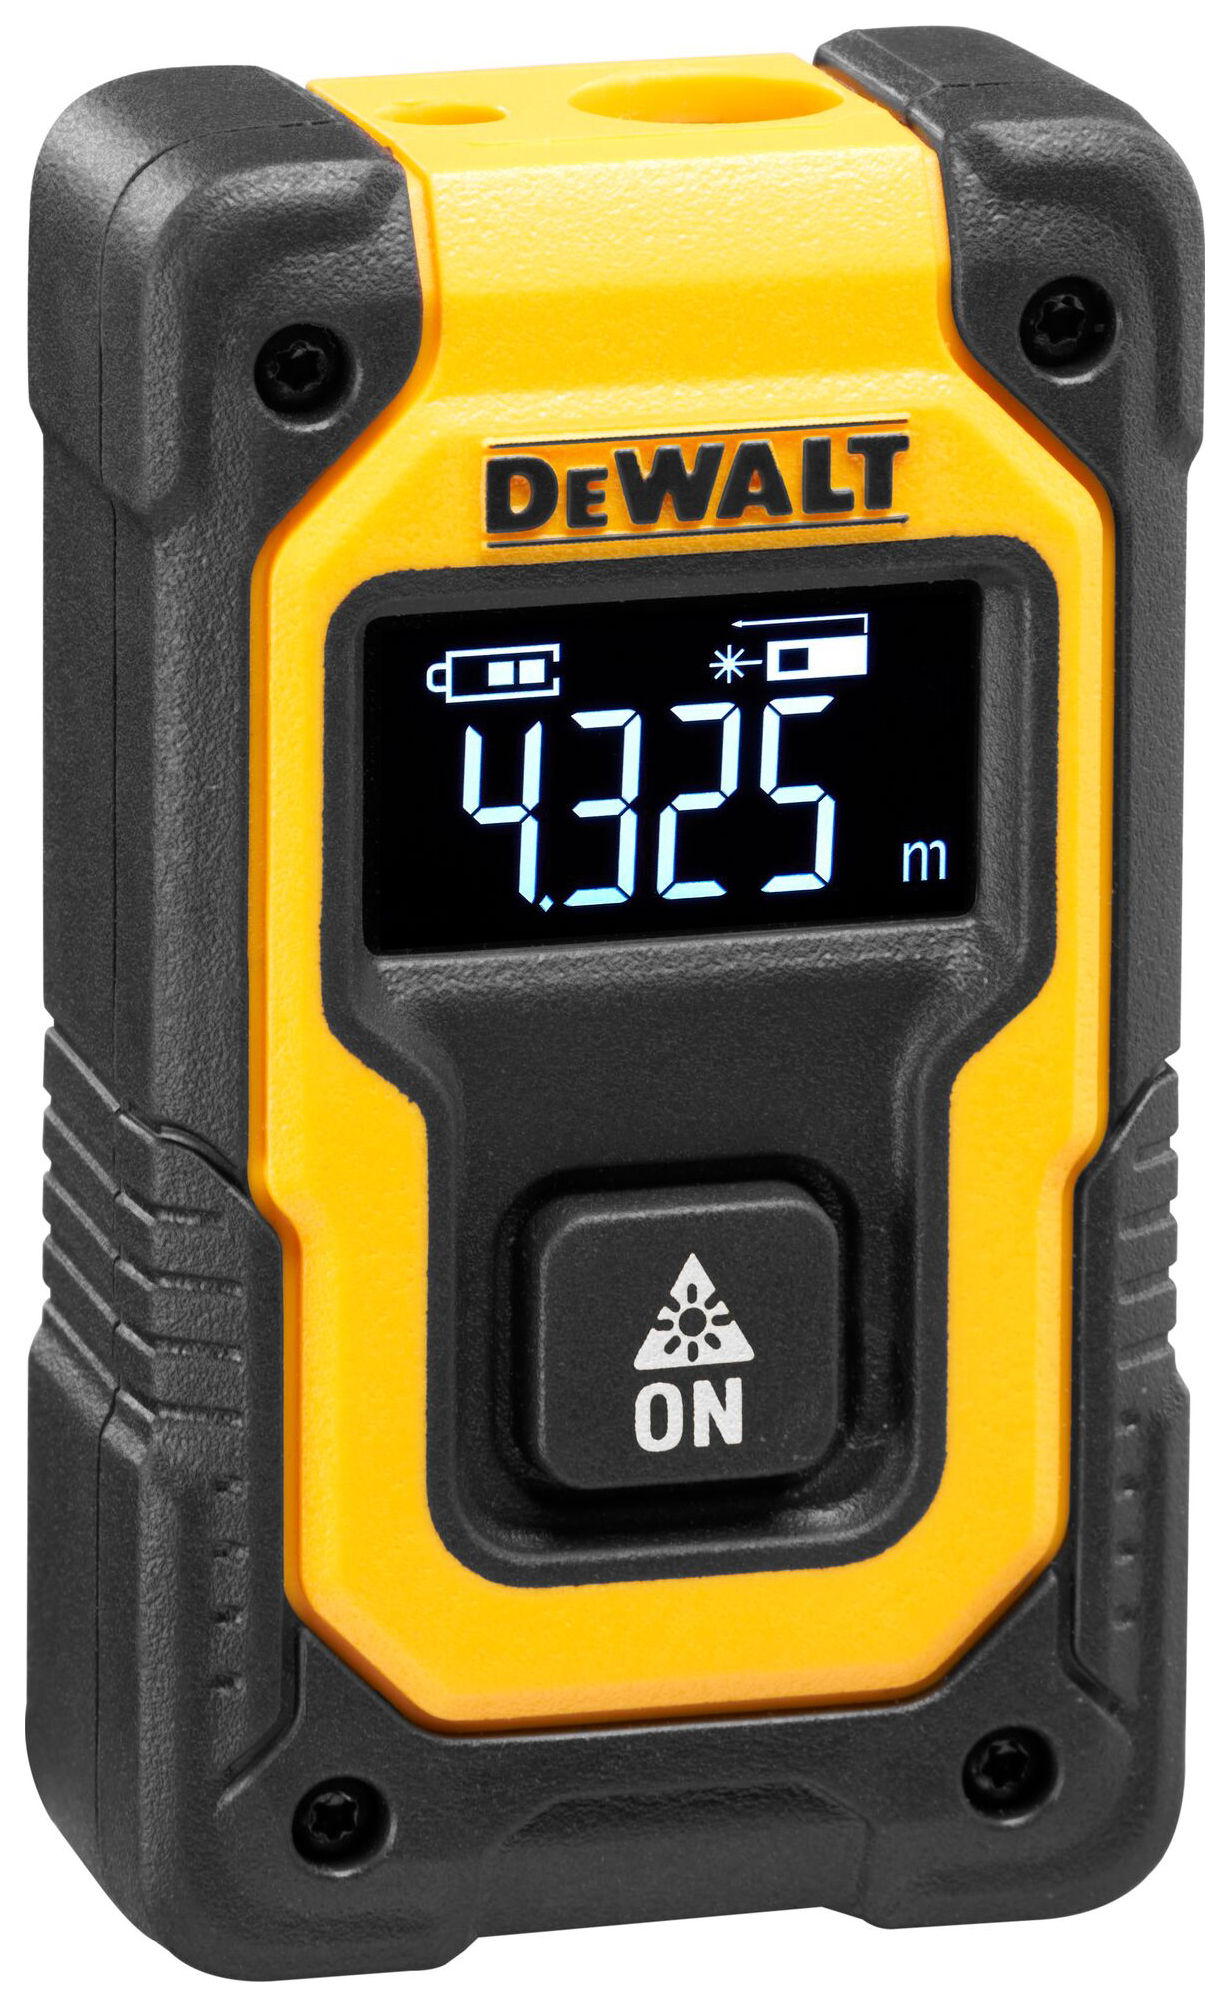 DEWALT DW055PL-XJ 16m Pocket Laser Distance Measure